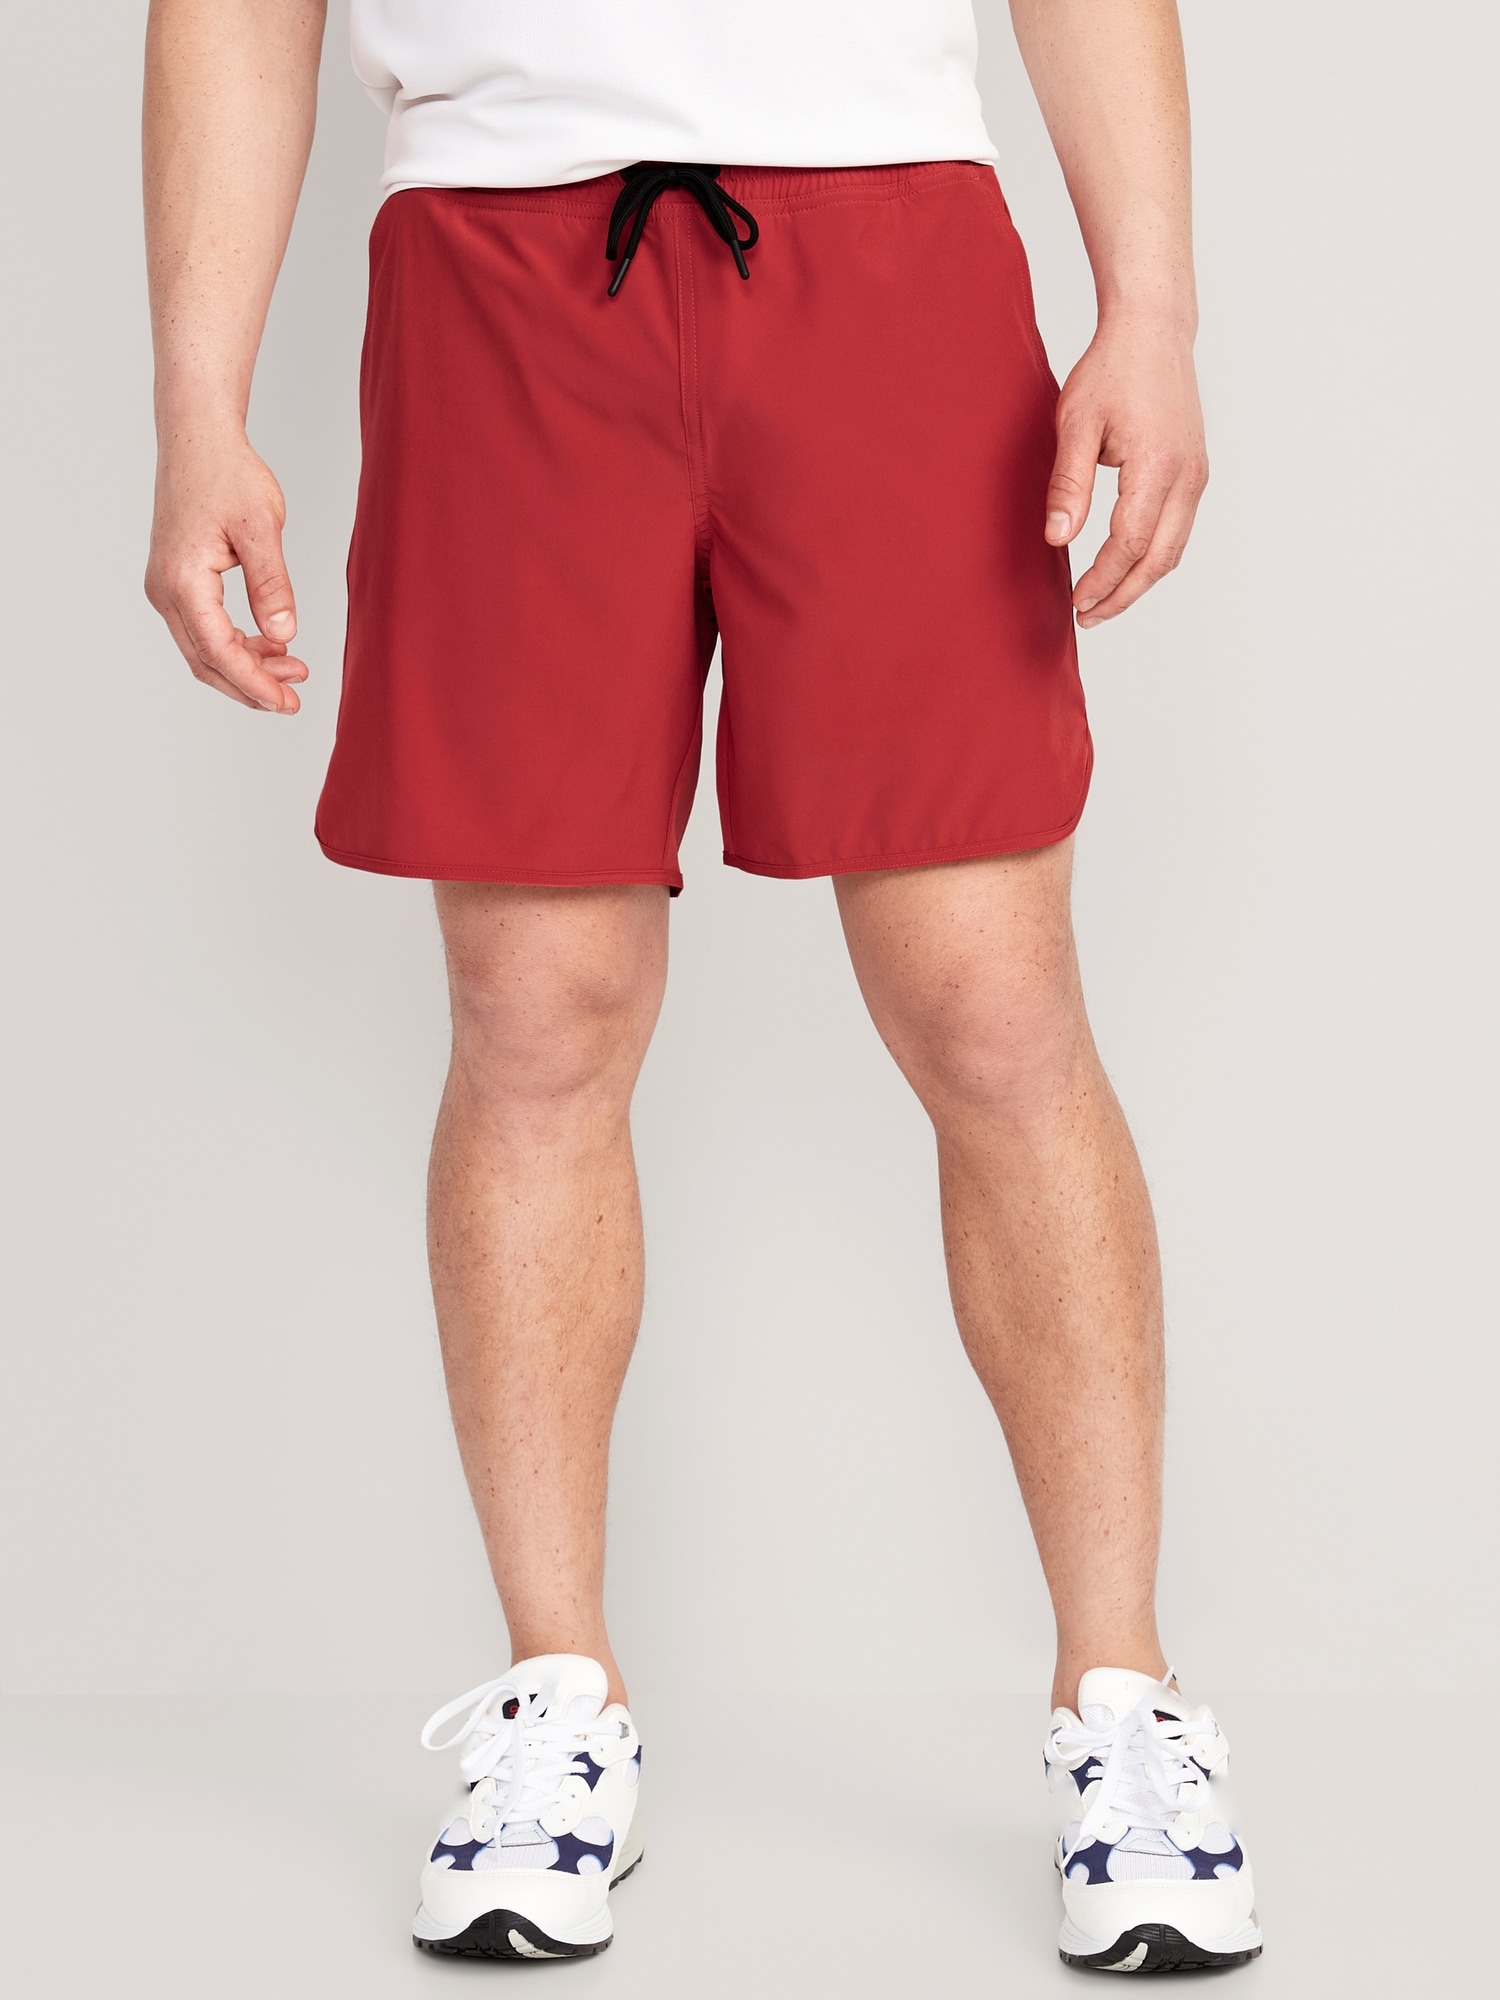 Old Navy StretchTech Rec Swim-to-Street Shorts -- 7-inch inseam red. 1